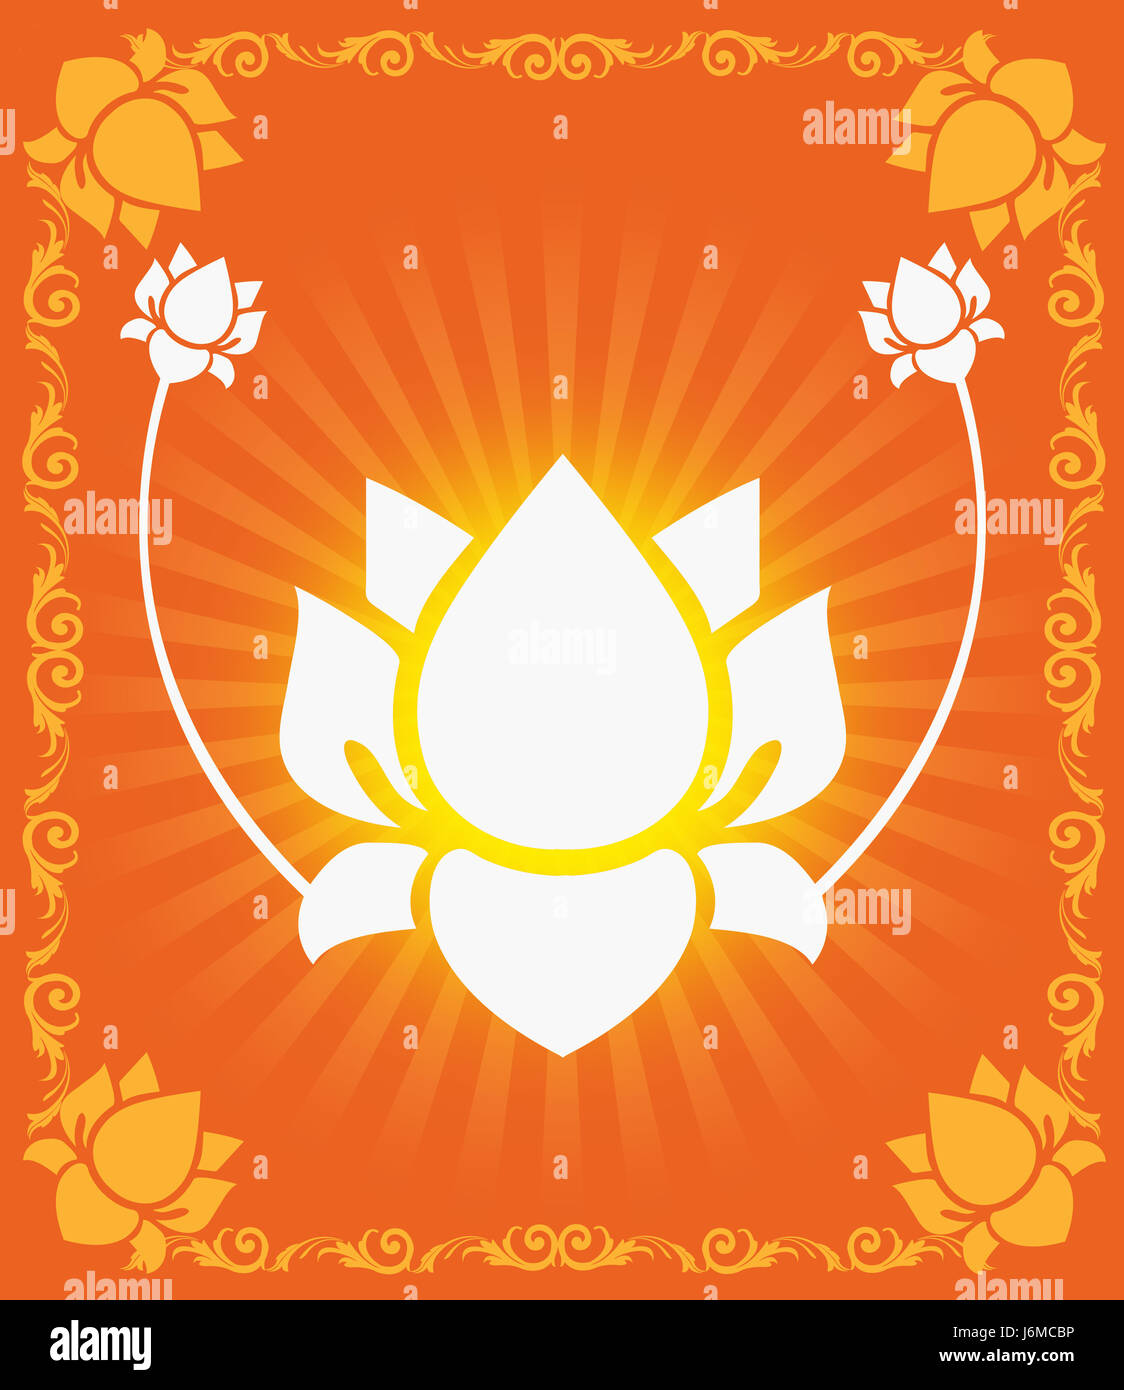 religion flower plant bloom blossom flourish flourishing lotus symbols floral Stock Photo